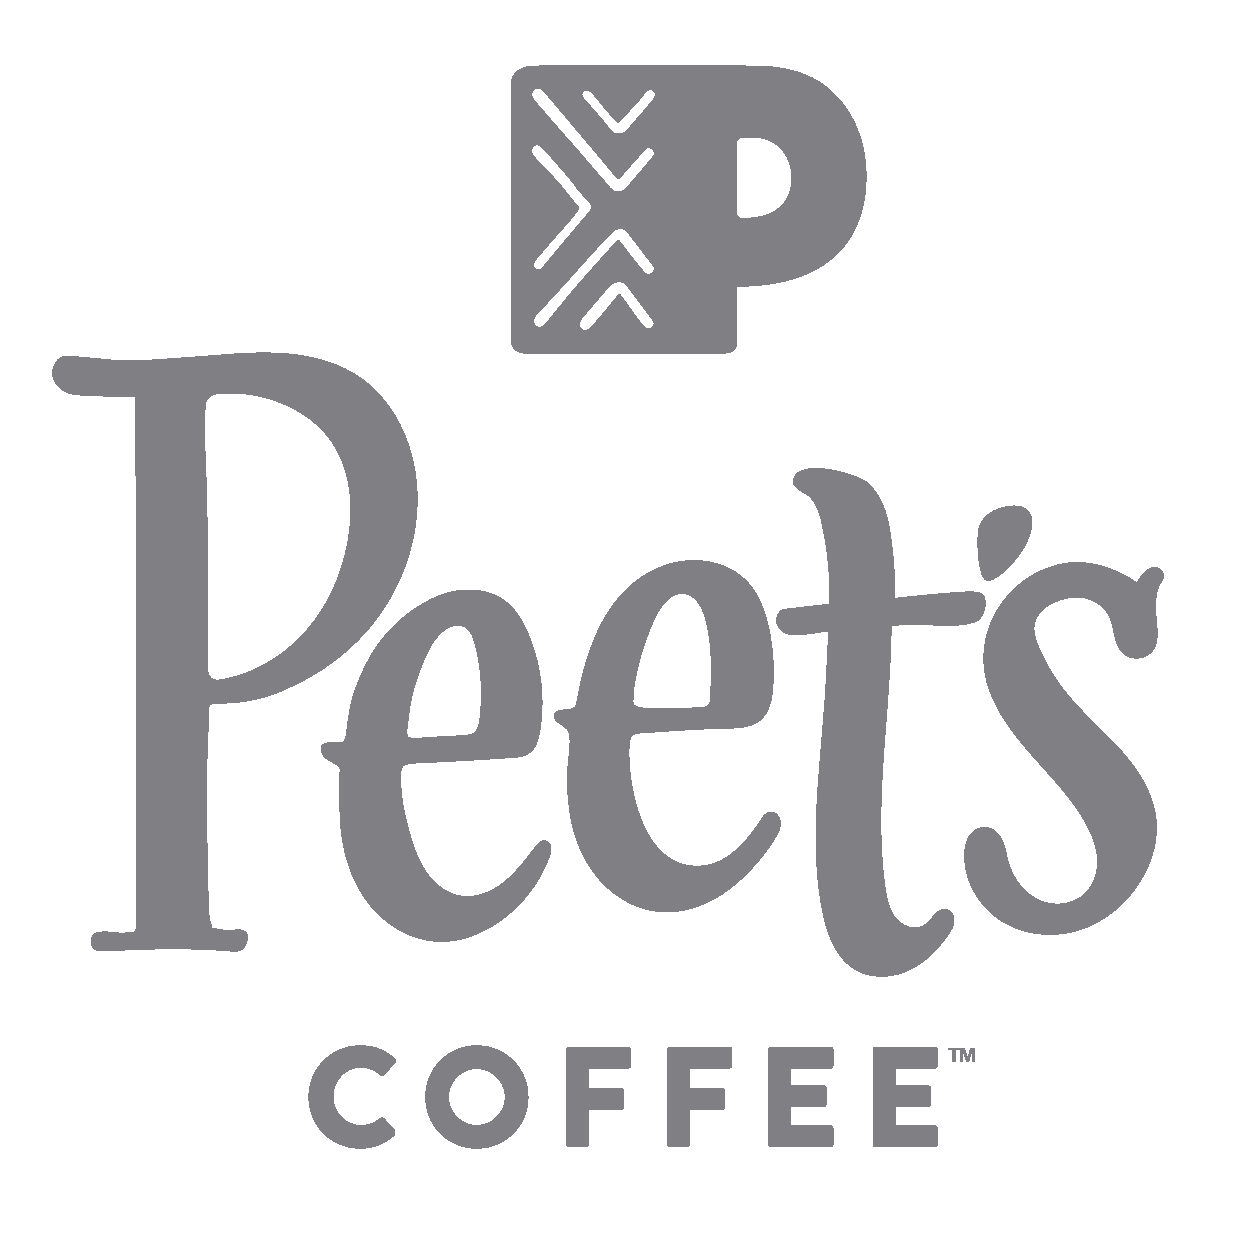 peets_coffee.png.